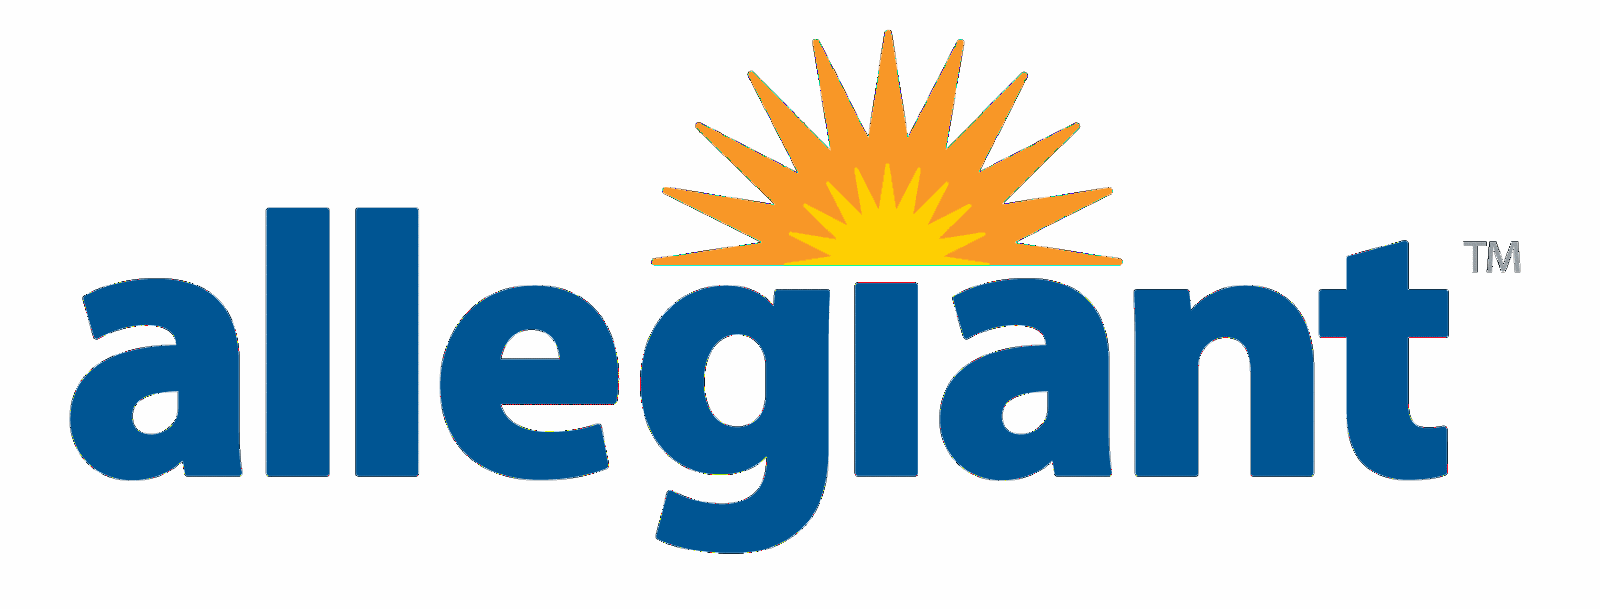 Allegiant Airline Logo Allegiant with sun on top of words